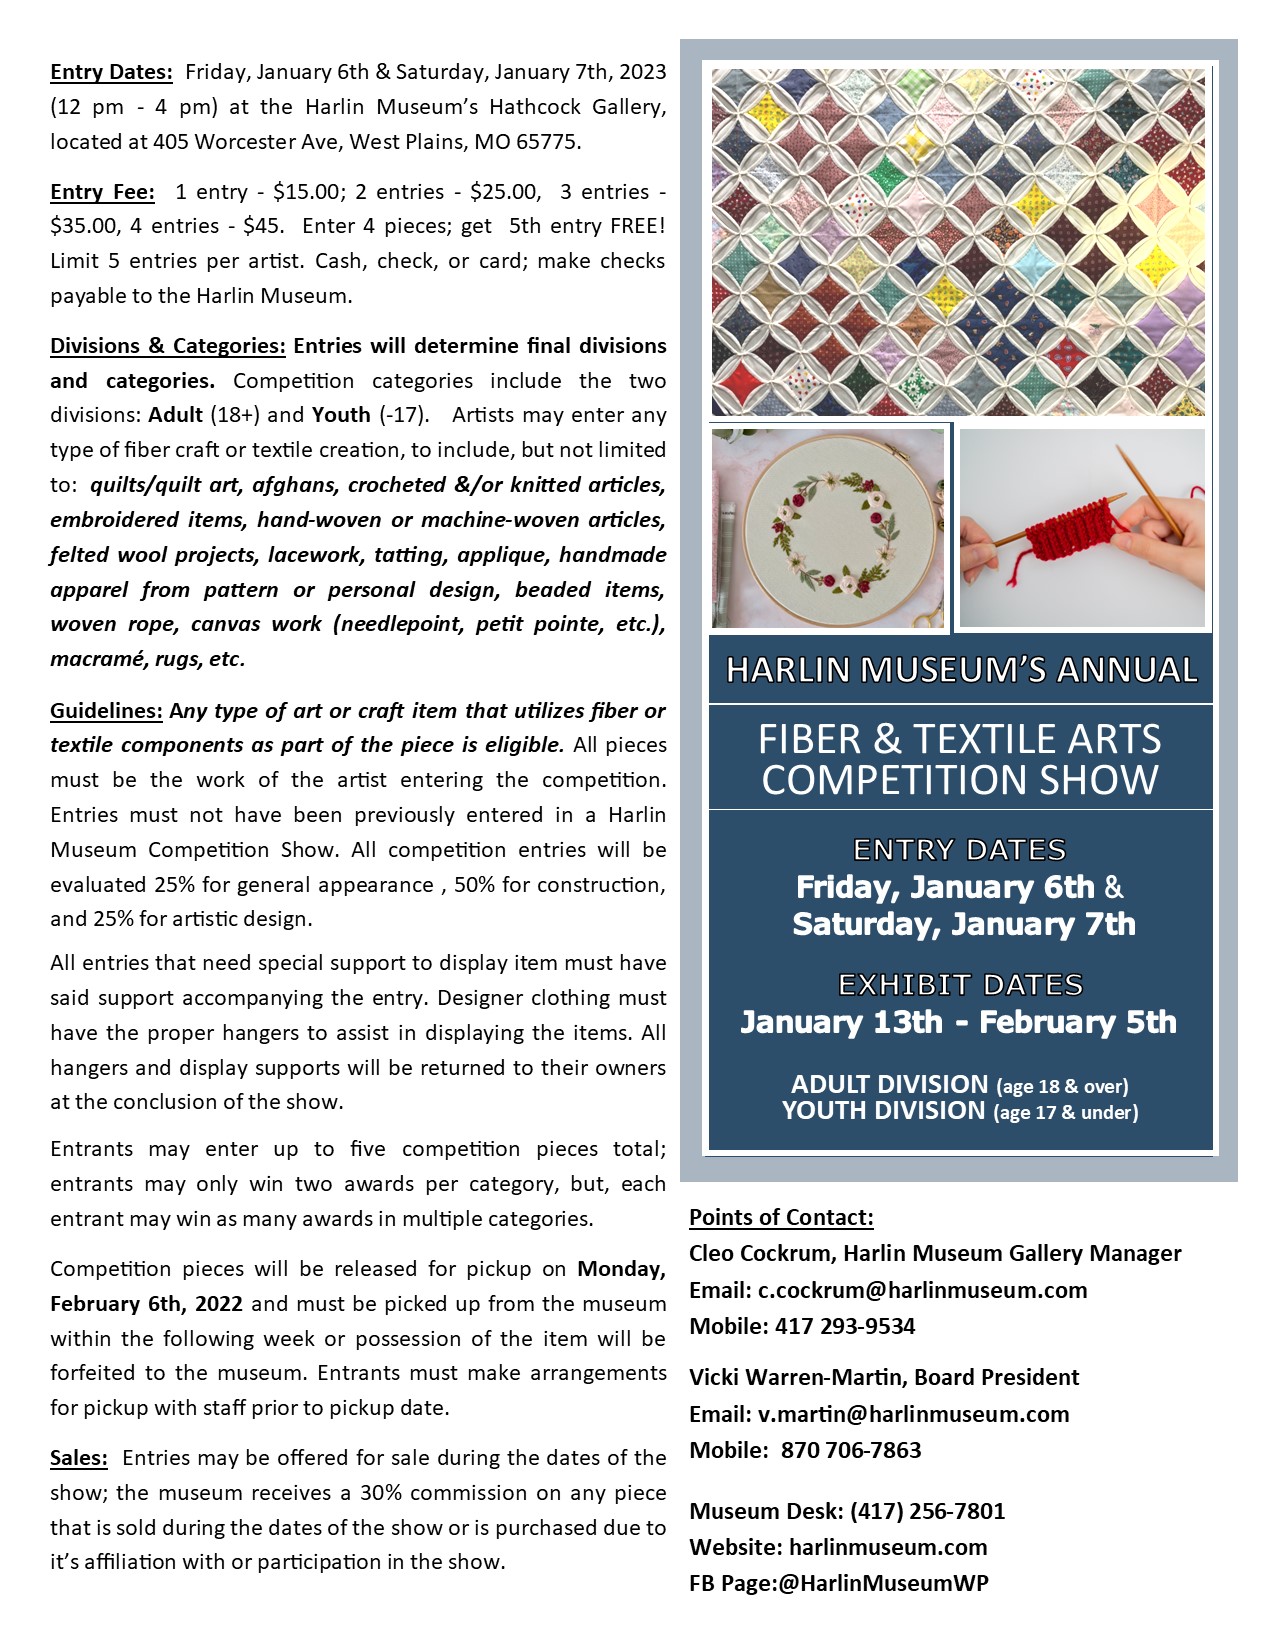 ENTRY DATE 2023 Fiber & Textile Arts Competition Show